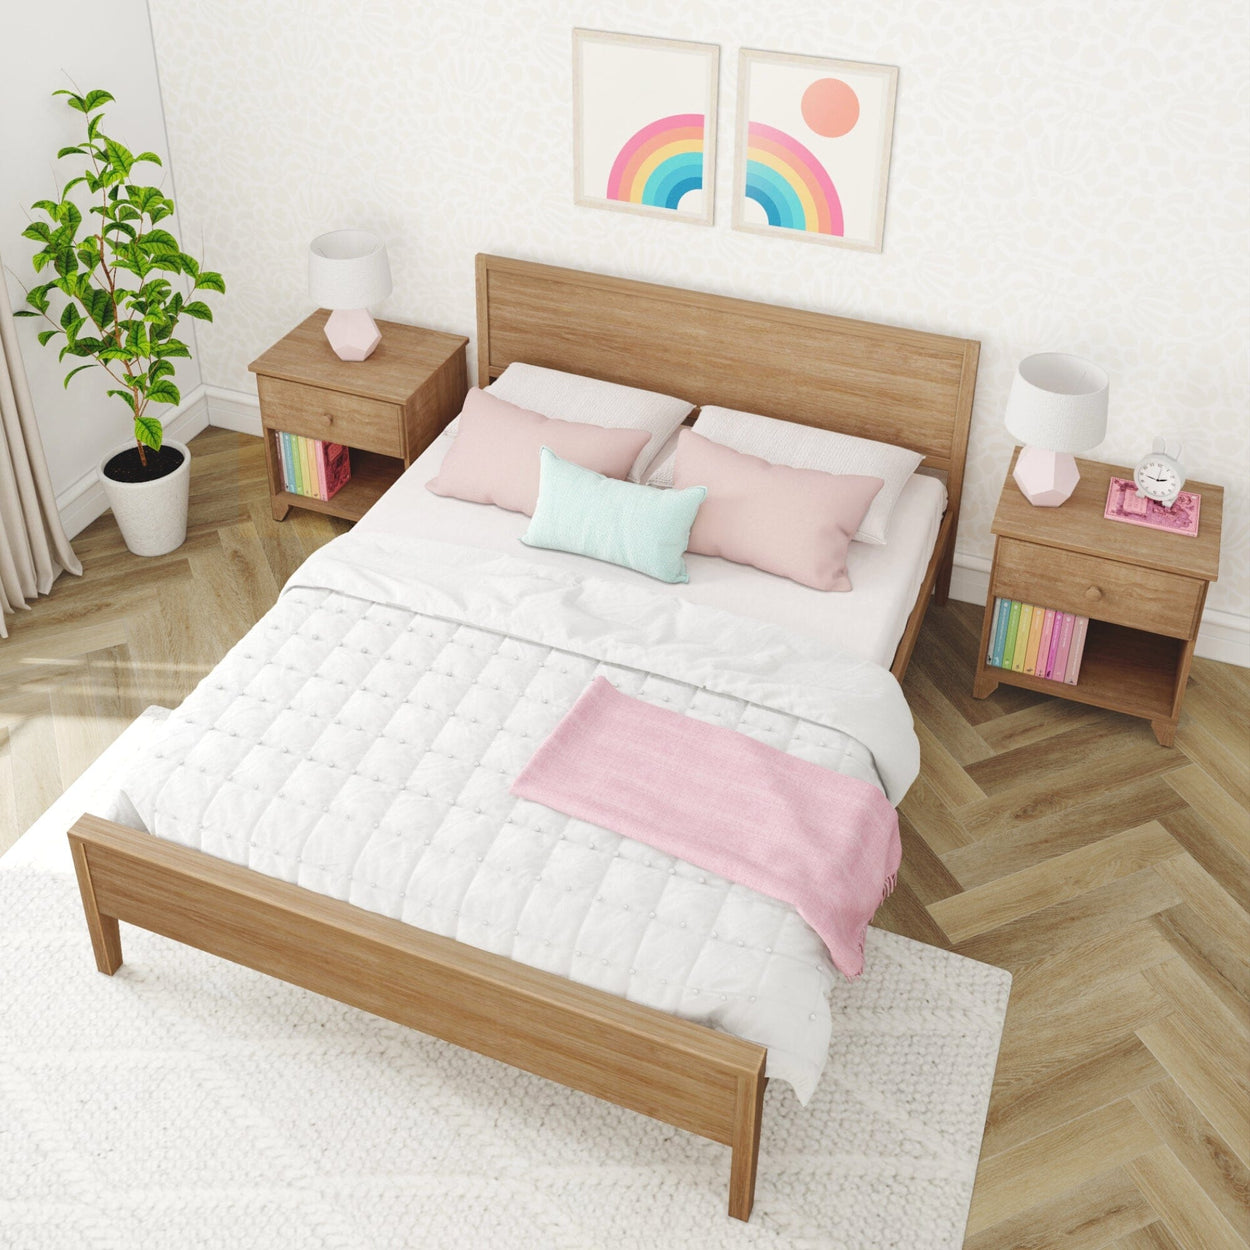 181102-007 : Kids Beds Classic Queen-Size Bed with Panel Headboard, Pecan